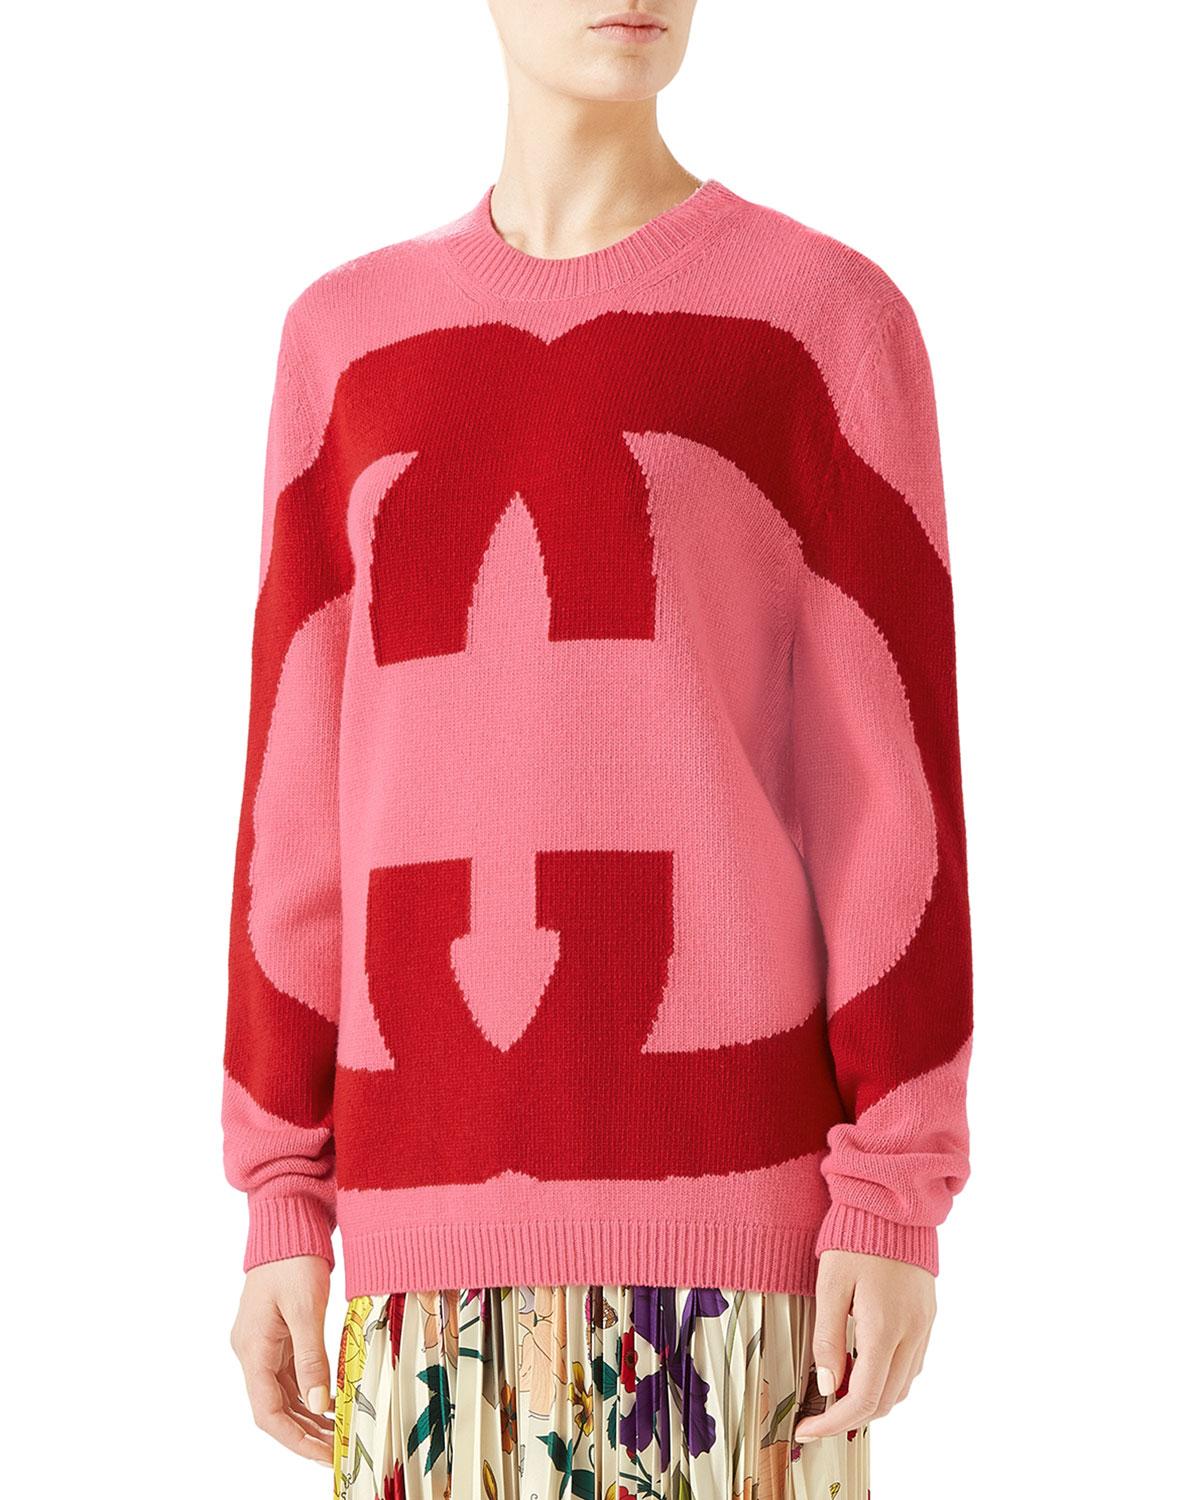 Gucci Interlocking Intarsia GG Wool Sweater in Red - Lyst